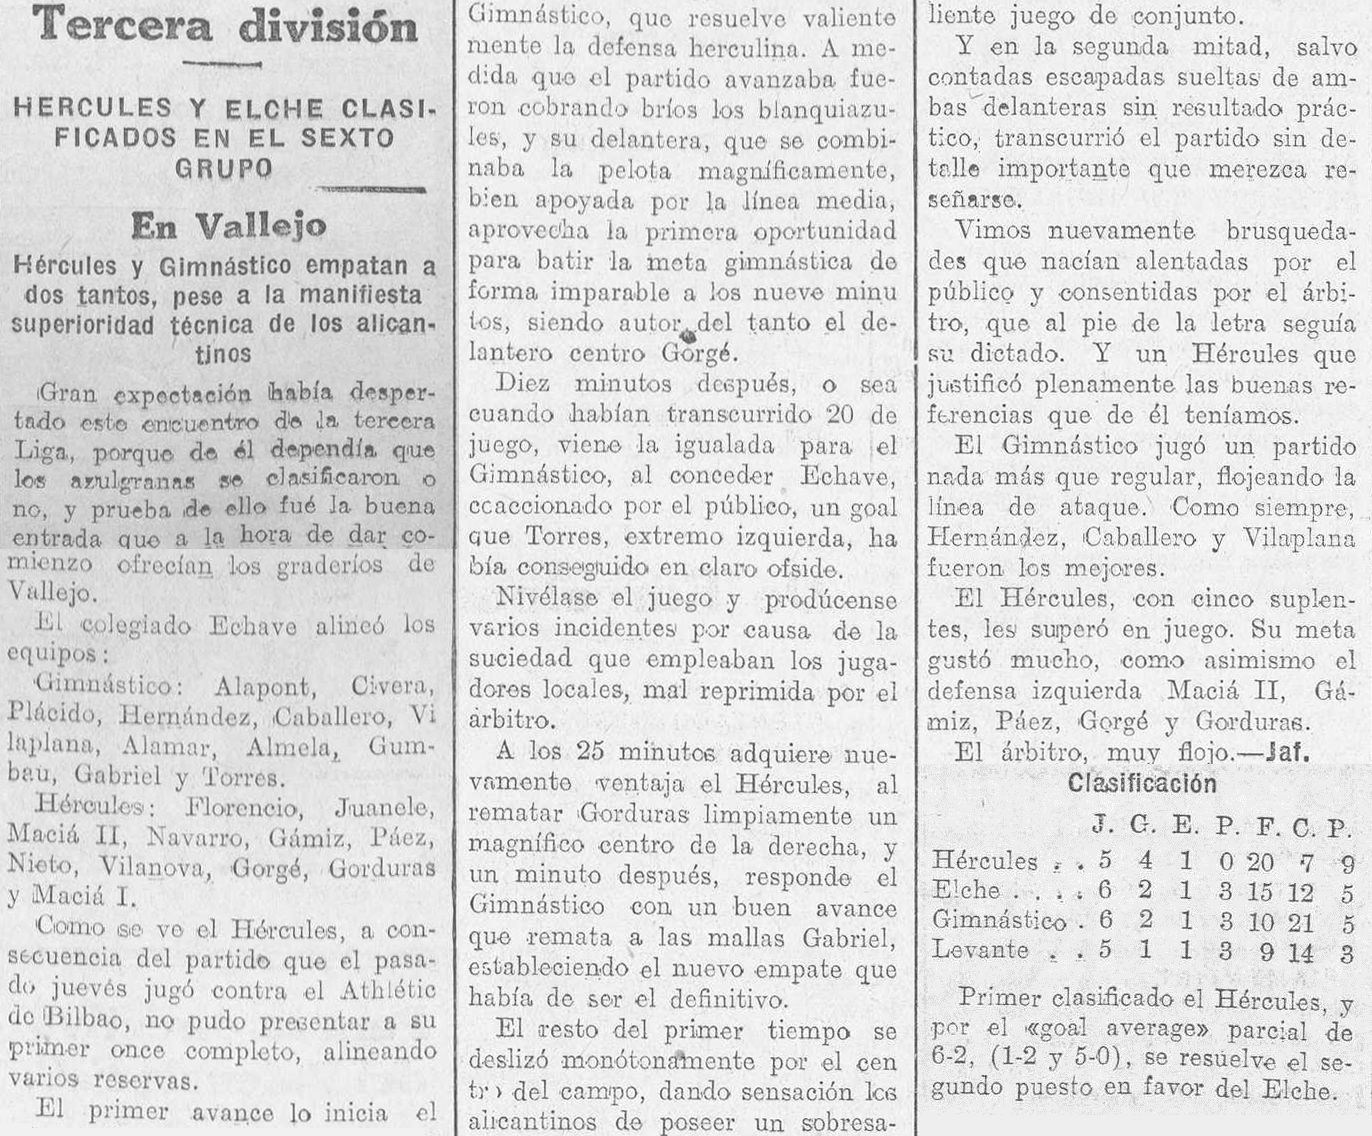 1933.01.15 (15 января 1933), Гимнастико - Эркулес, 2-2.png